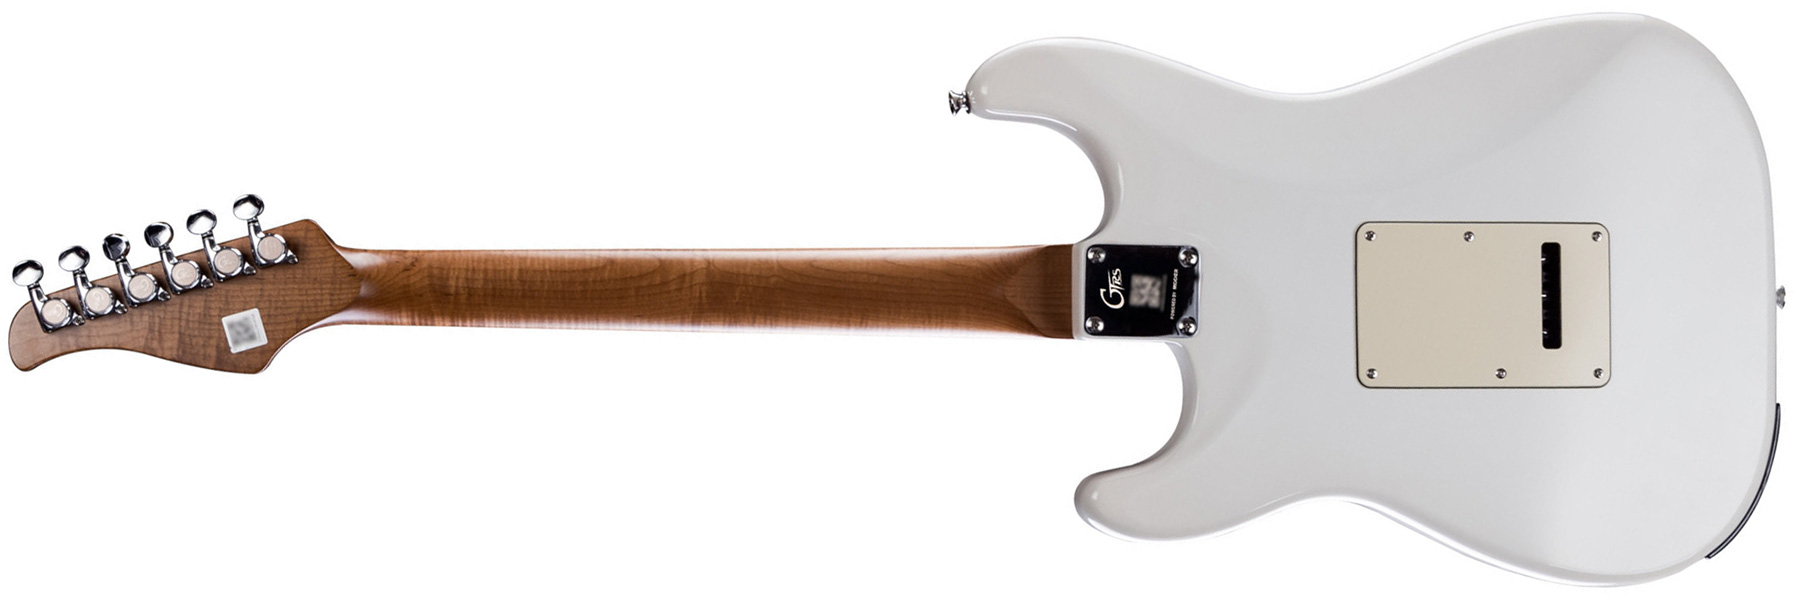 Mooer Gtrs P800 Pro Intelligent Guitar Hss Trem Rw - Olympic White - Modeling guitar - Variation 1